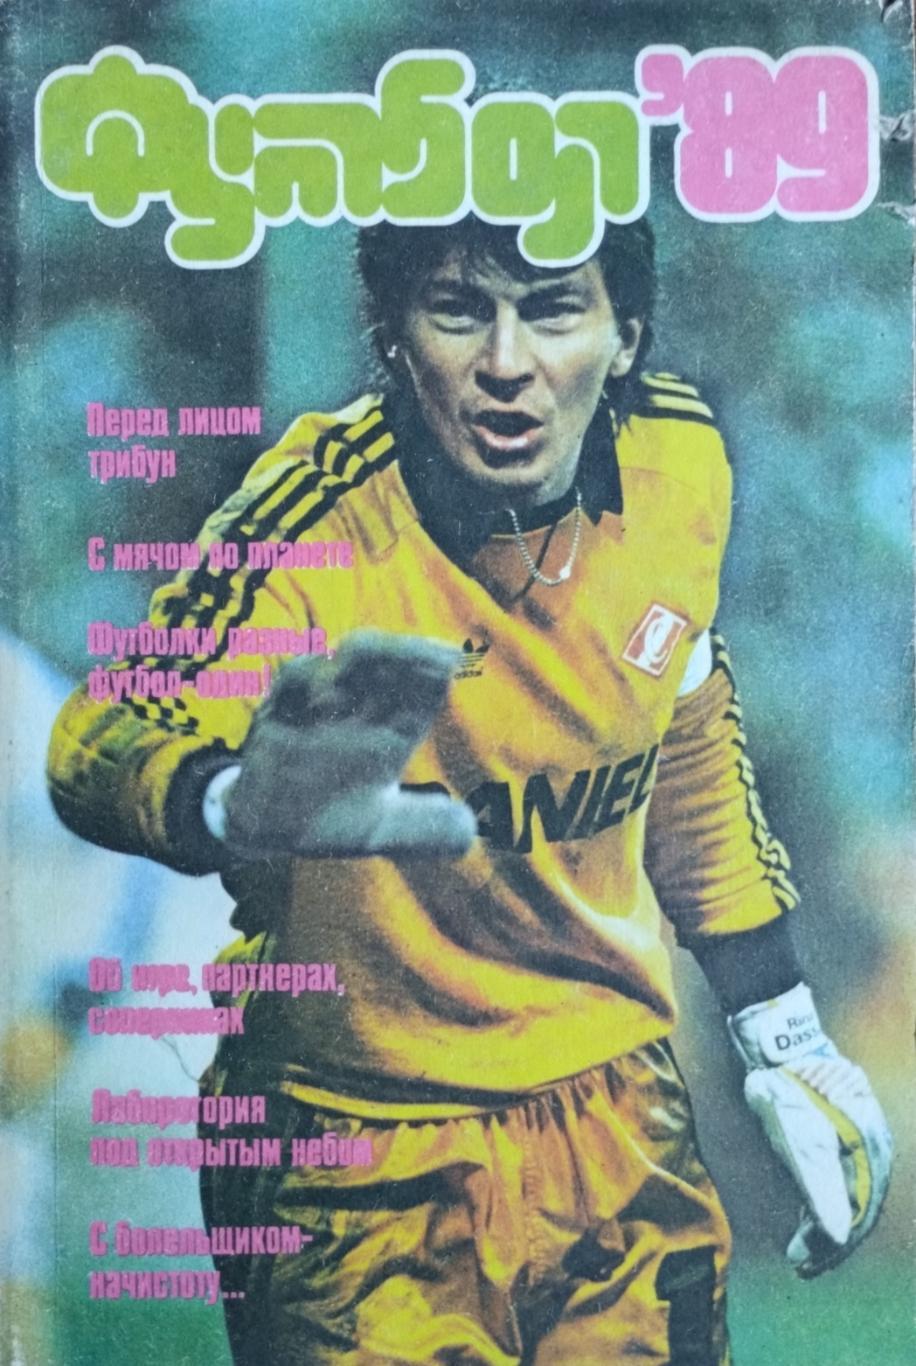 Футбол - 89: Альманах. Л. Г. Лебедев. 1989. 160 стр.